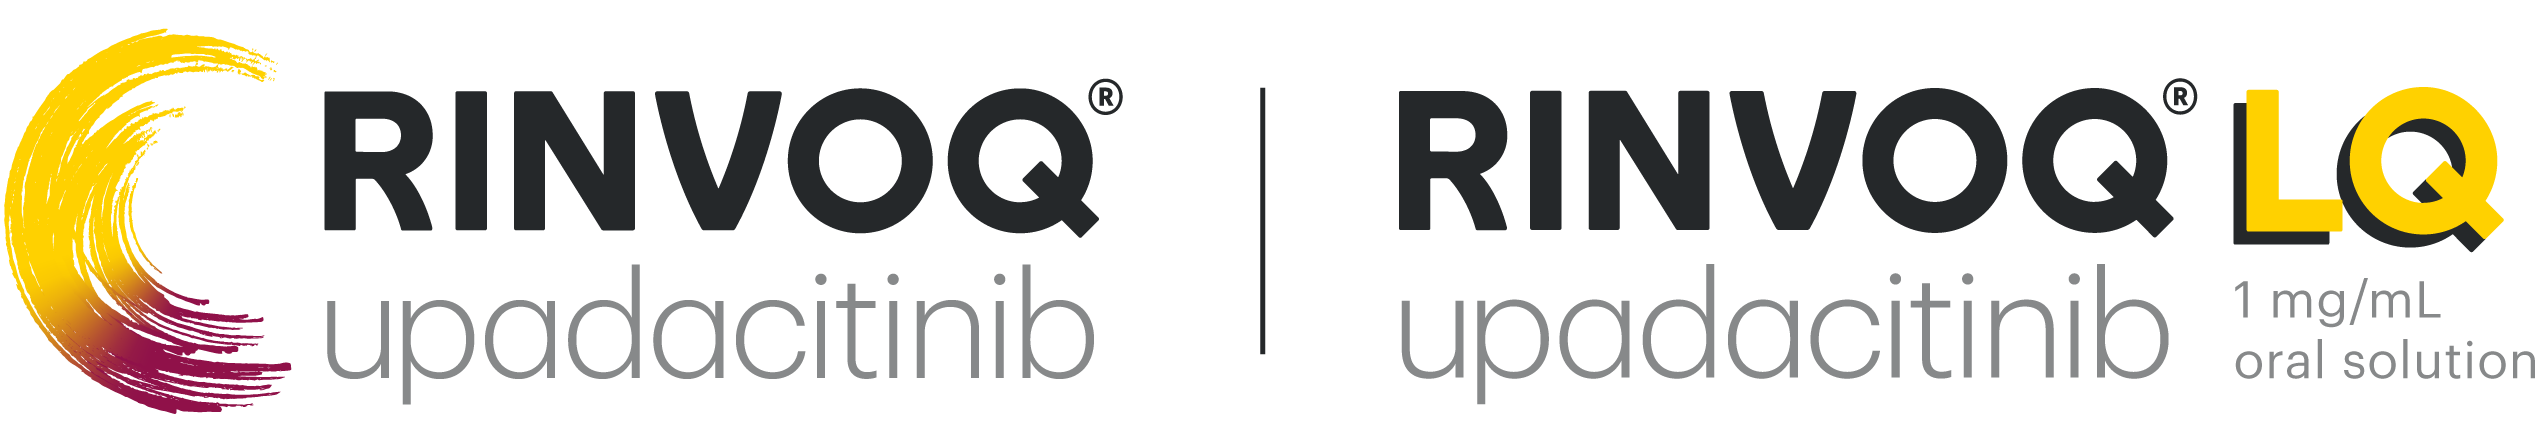 RINVOQ logo and RINVOQ Oral Solution logo